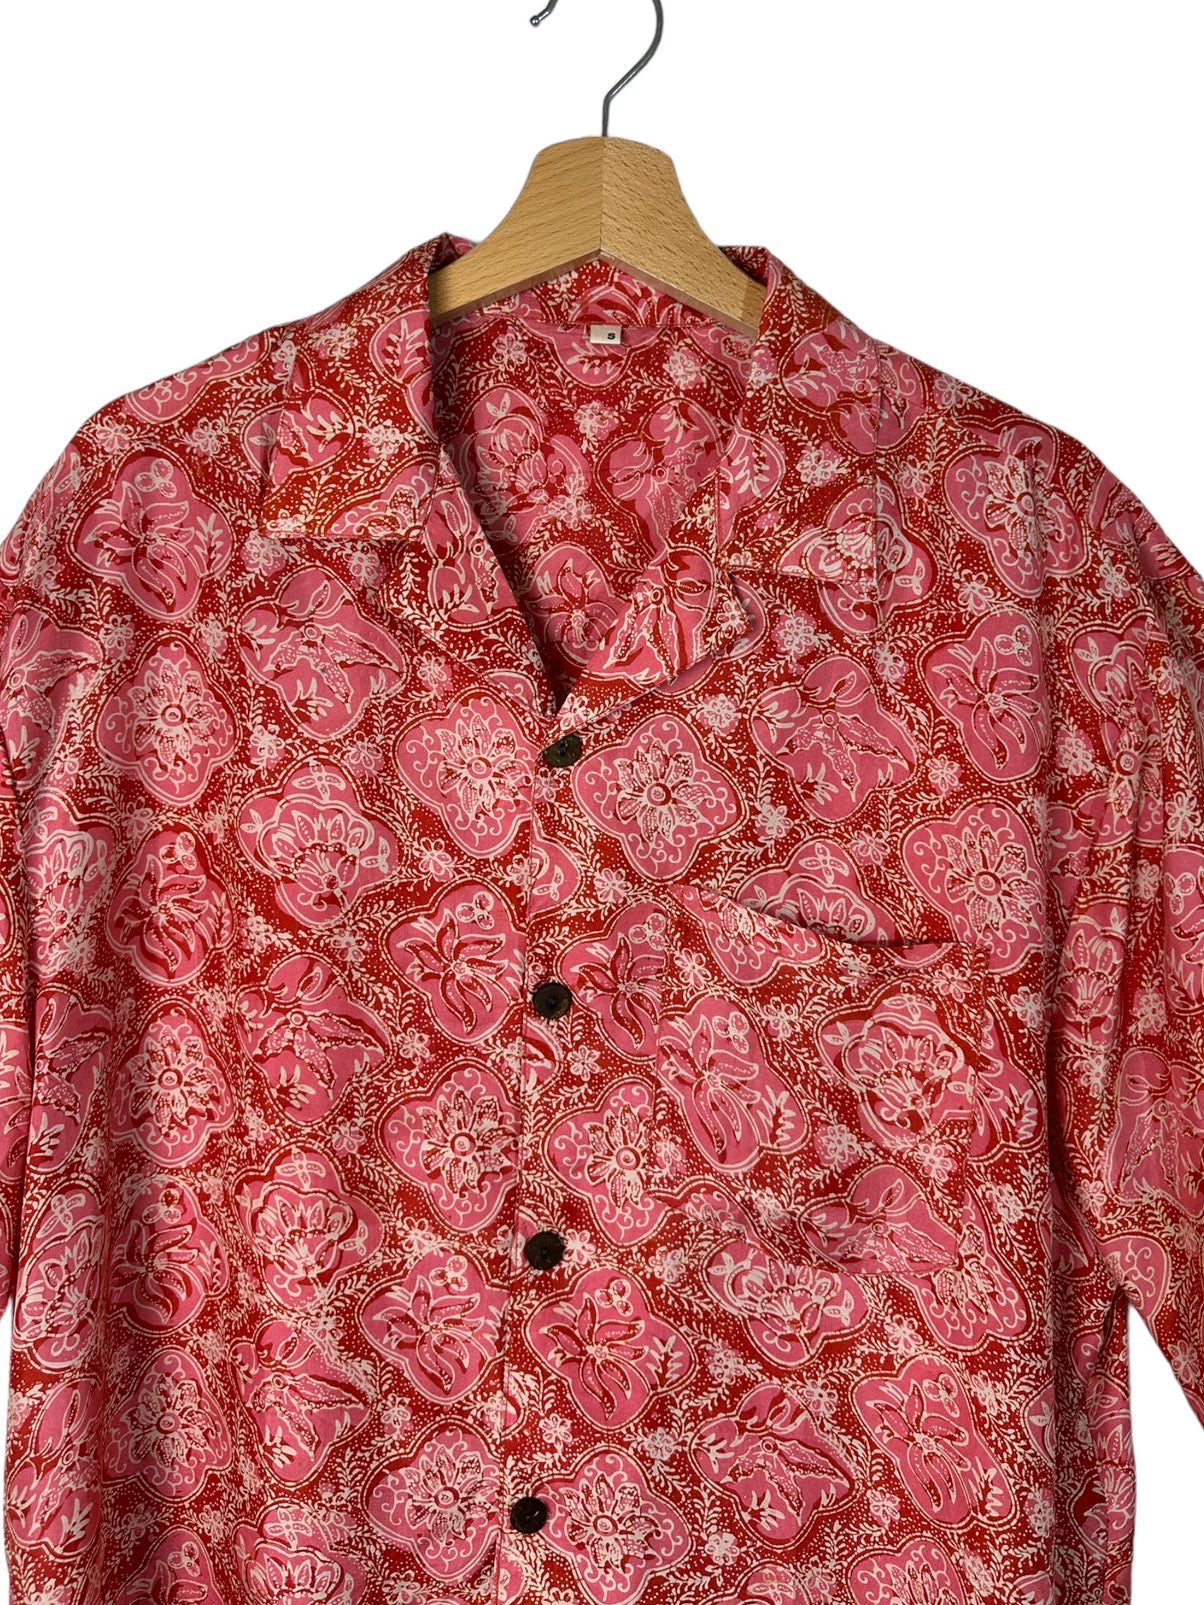 Vintage printed red silk shirt (S)